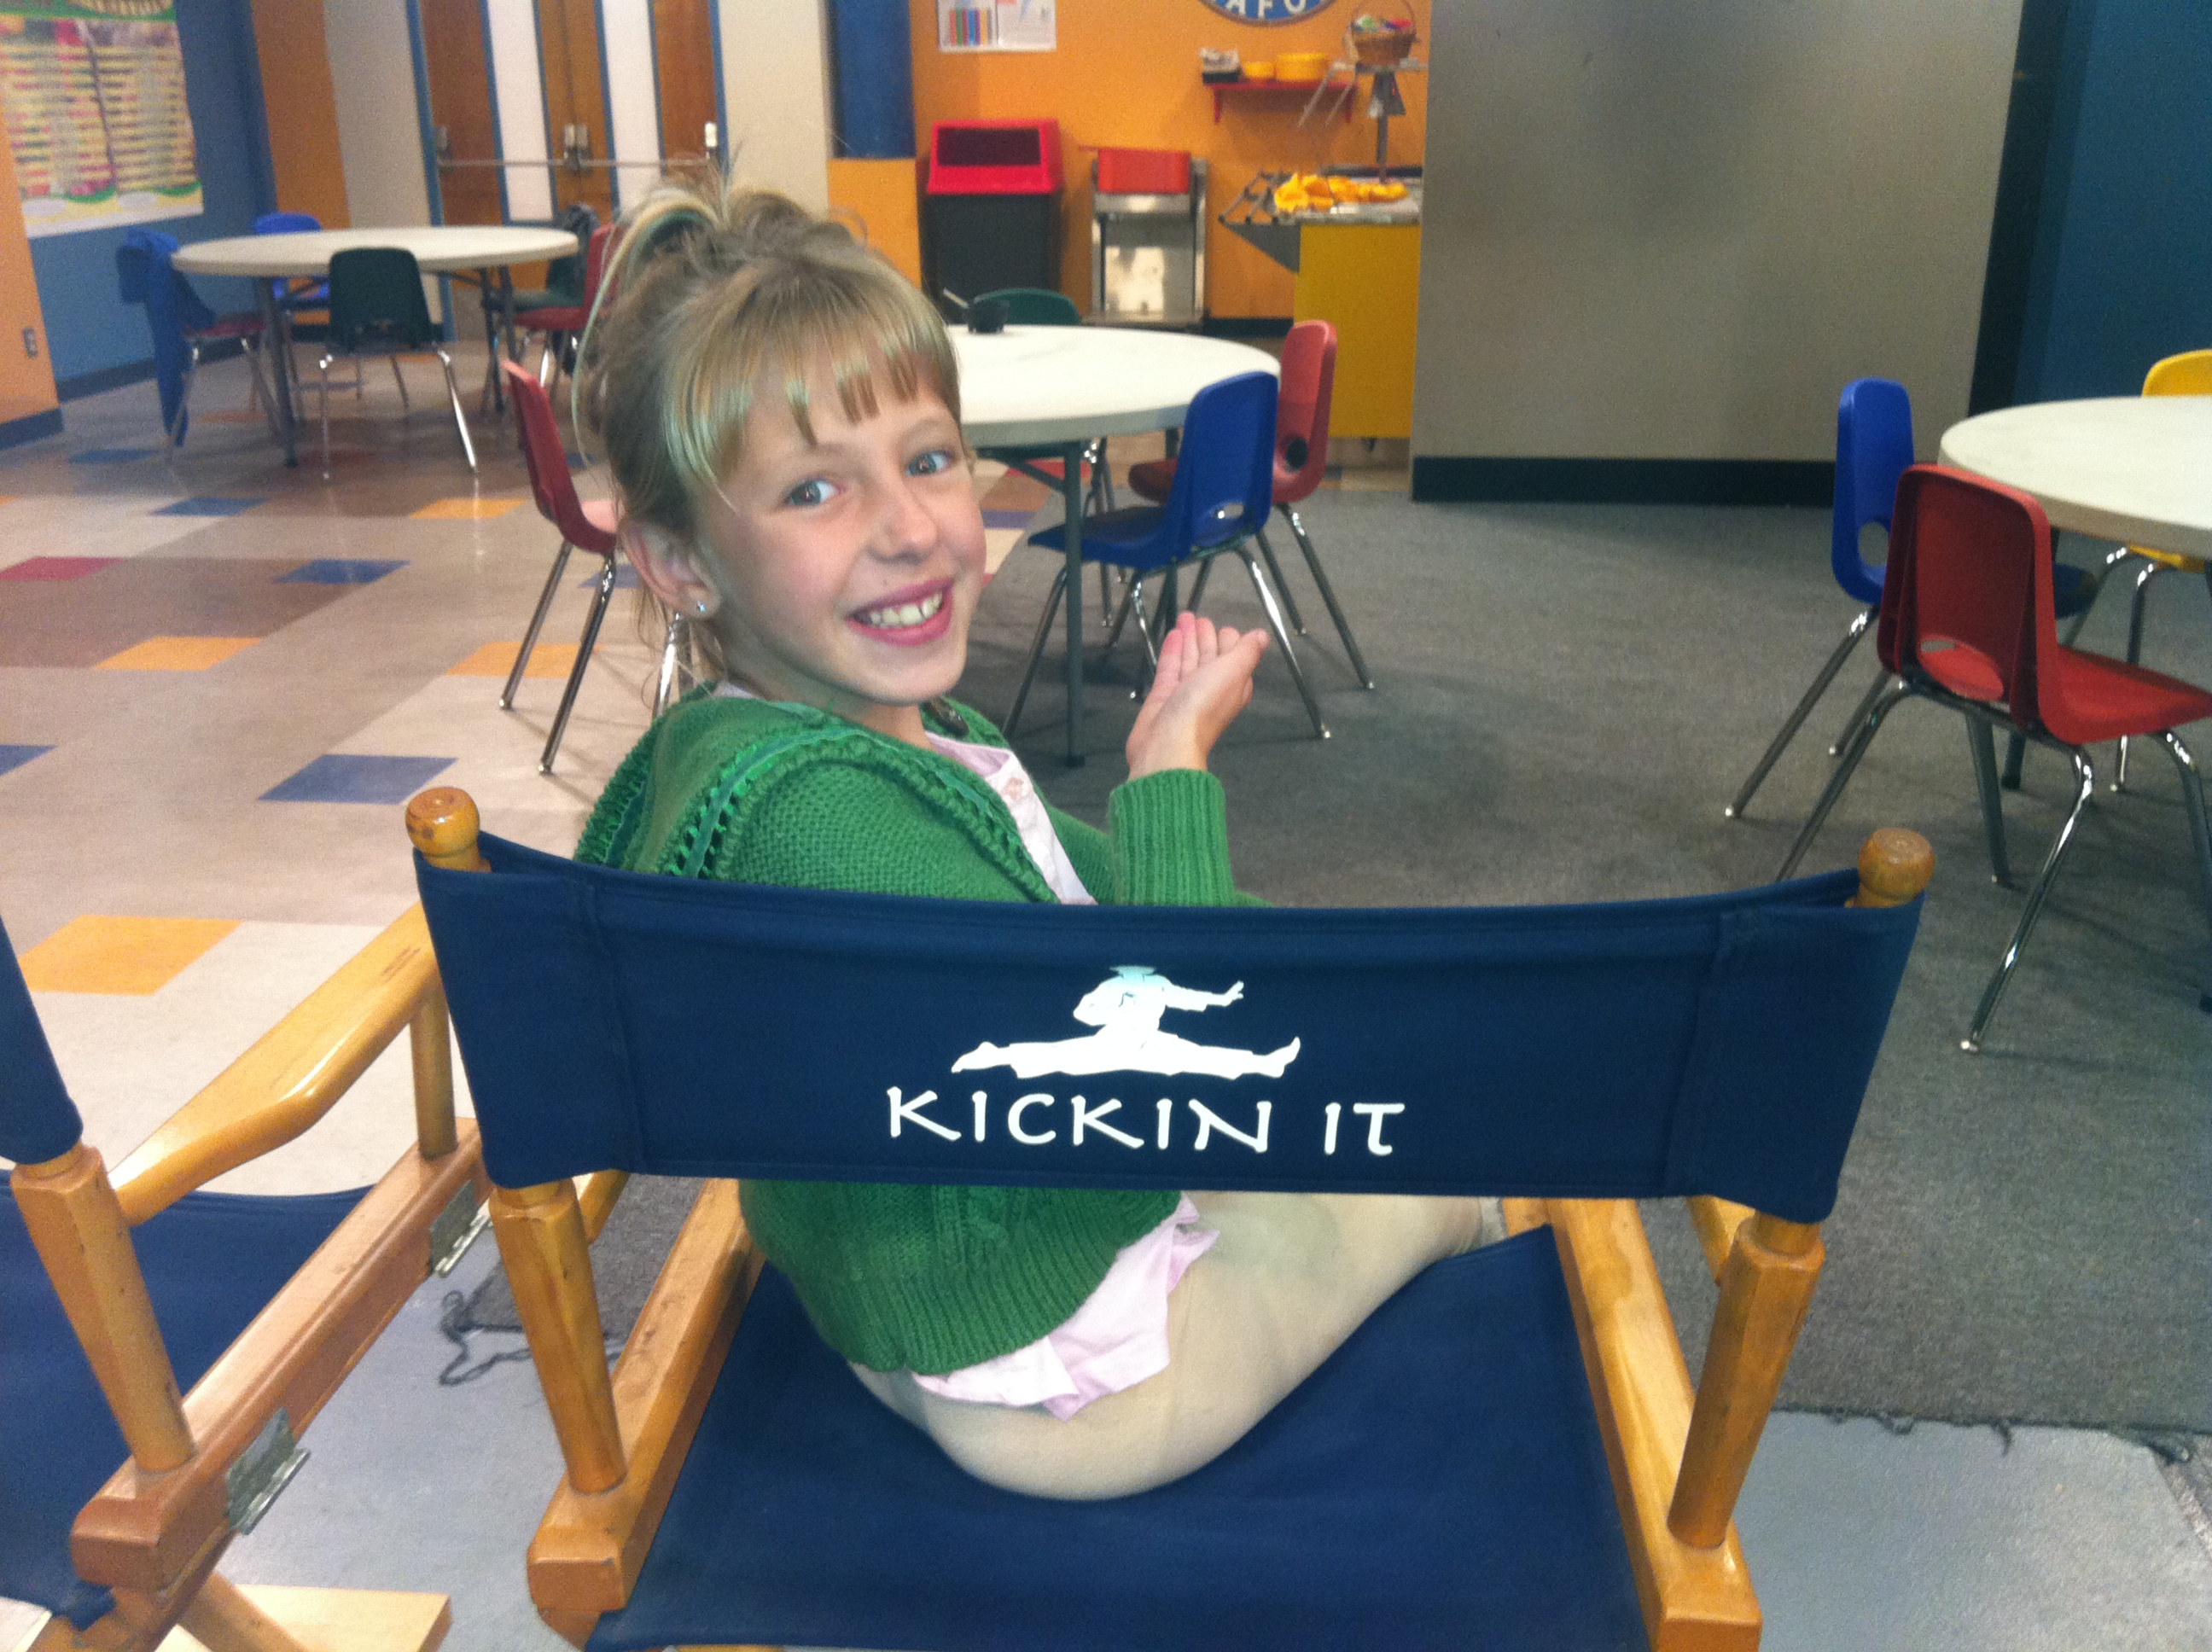 Kickin' it on the set of KICKIN' IT.